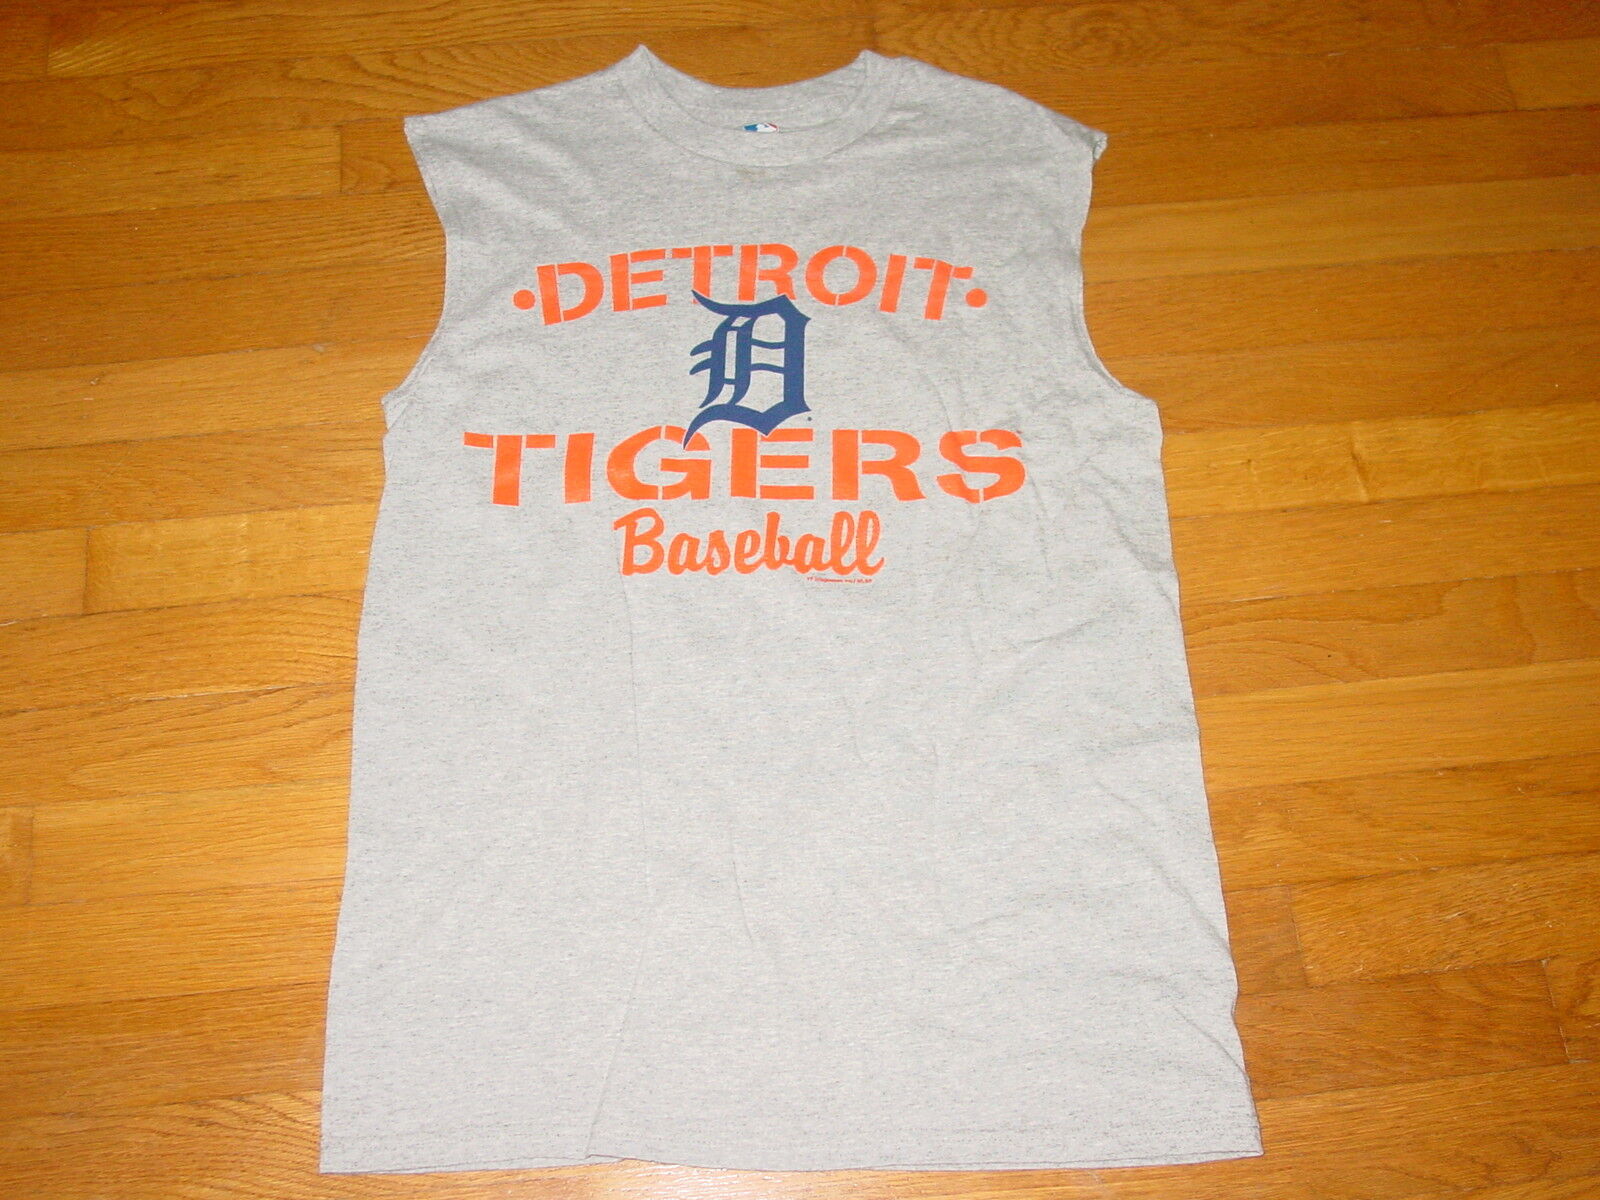 detroit tigers muscle shirt